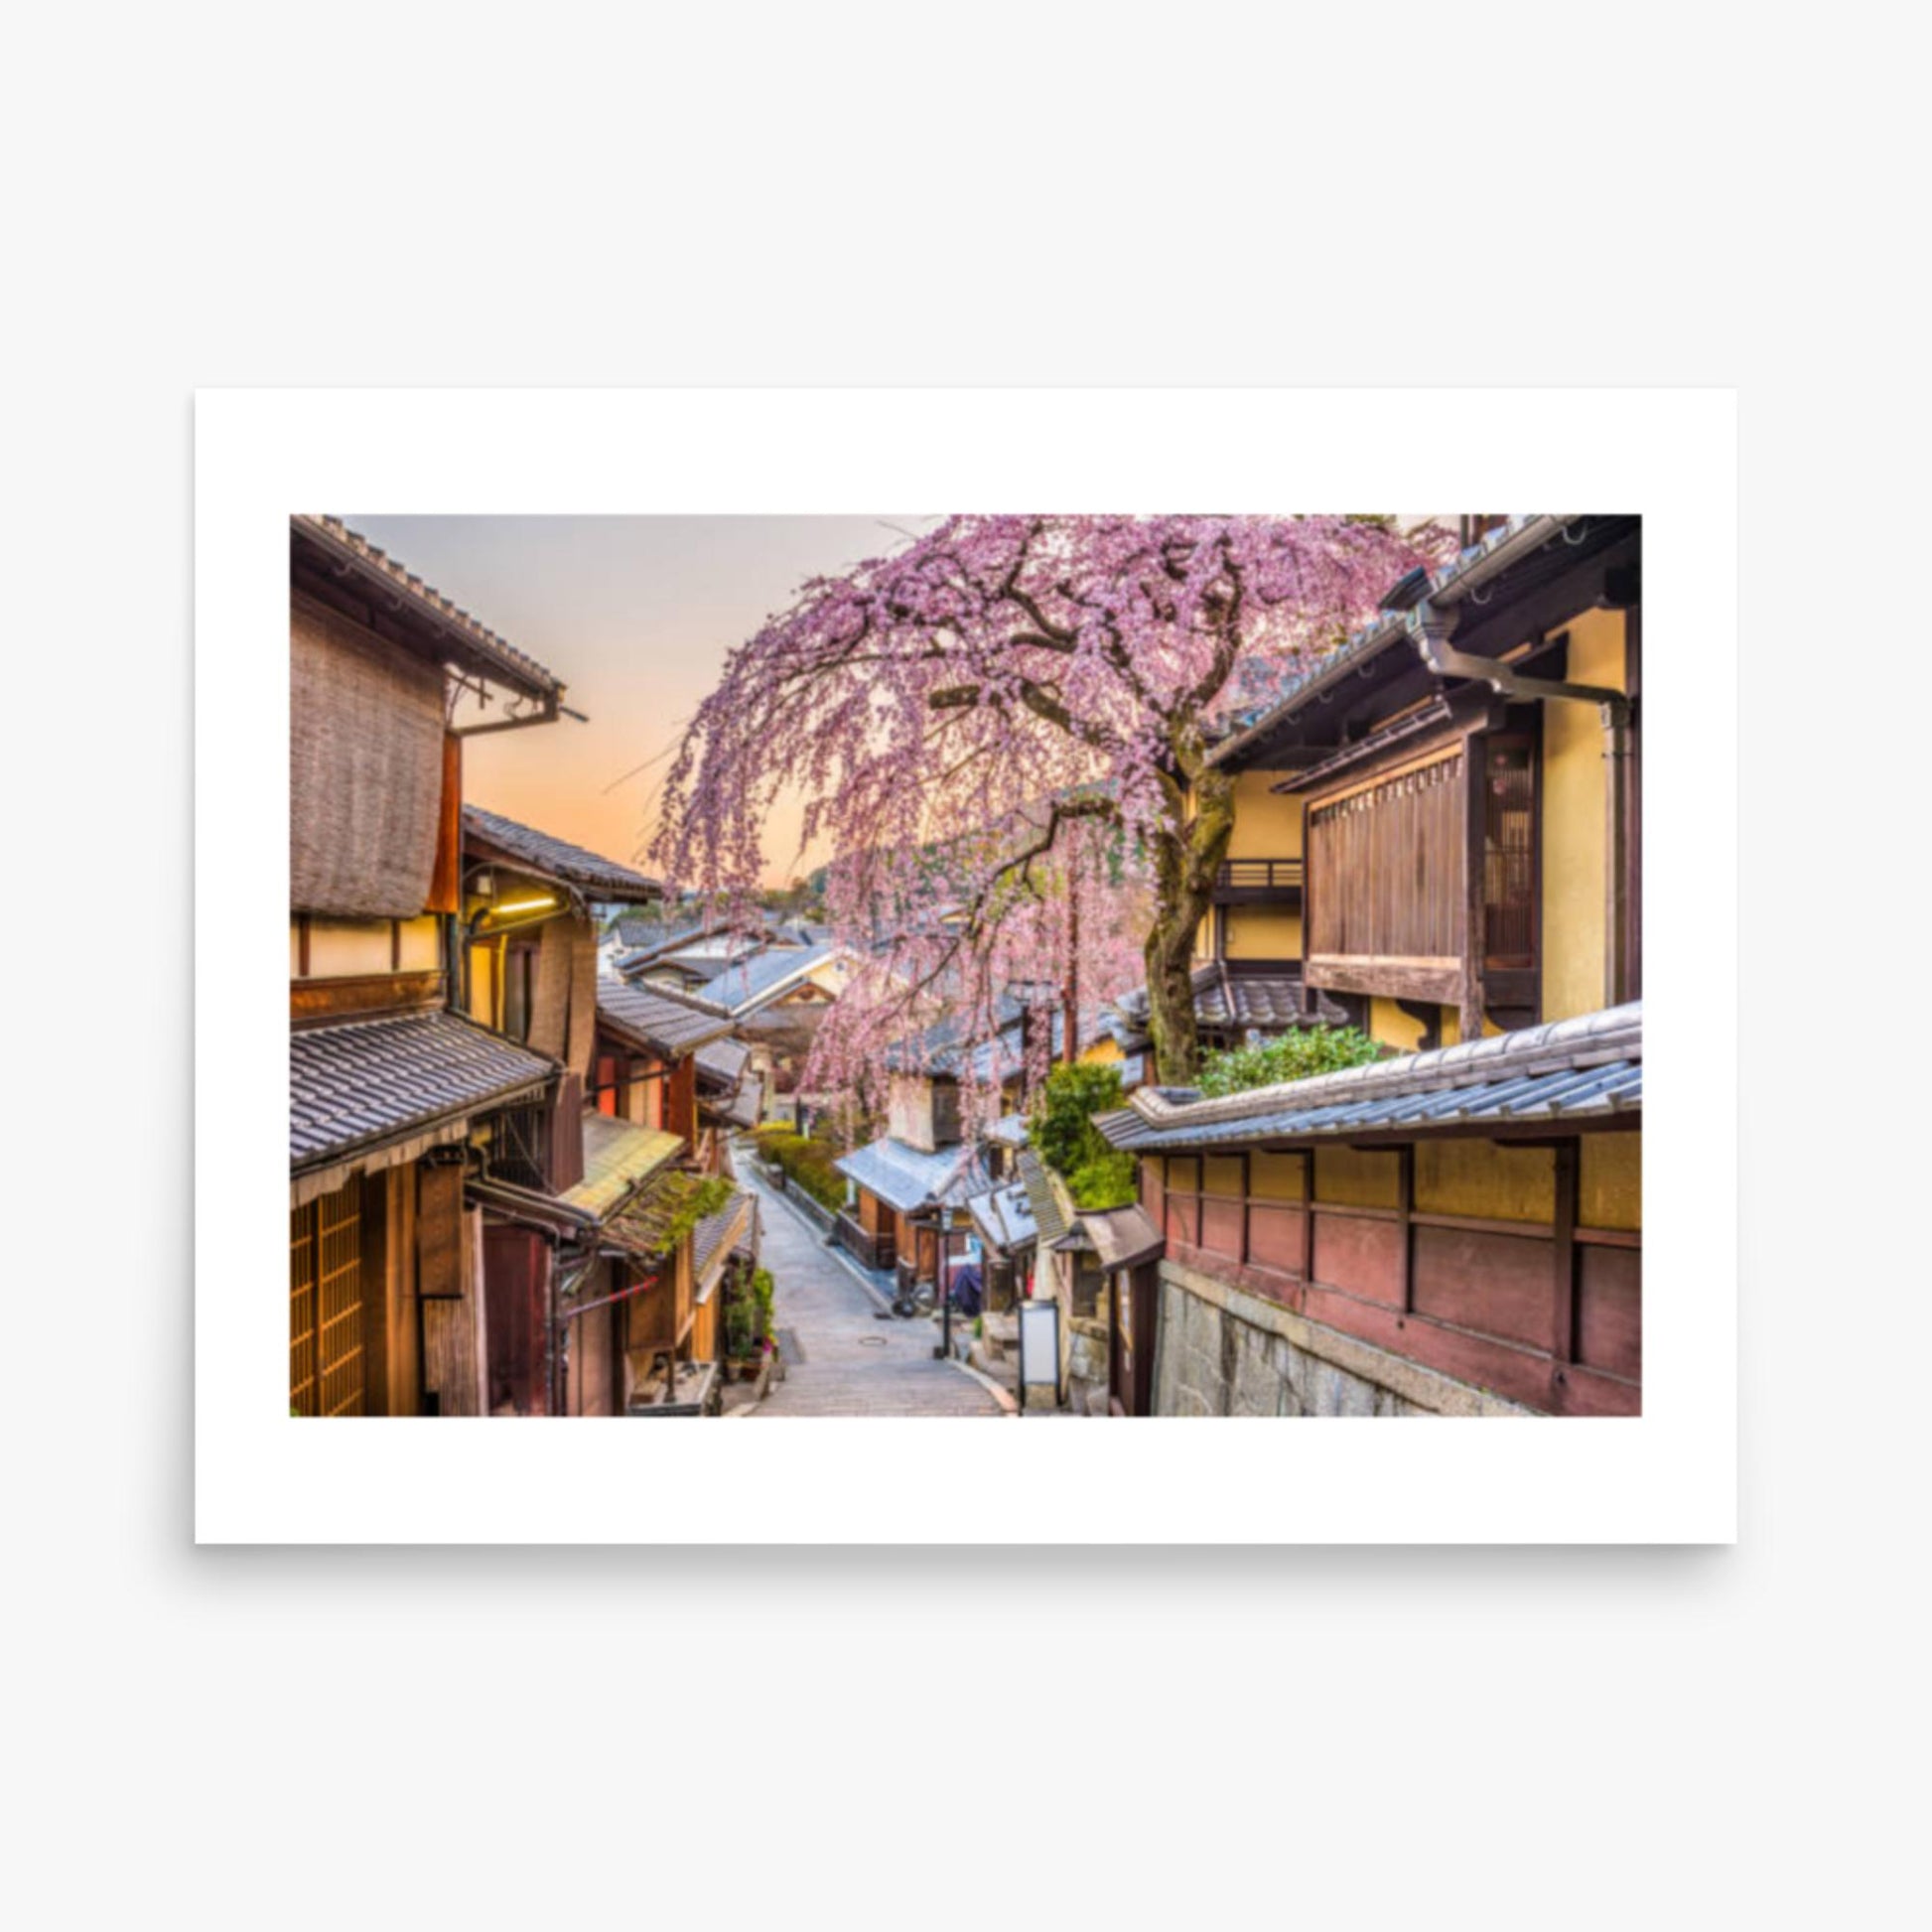 Kyoto, Japan in Sprint 18x24 in Poster